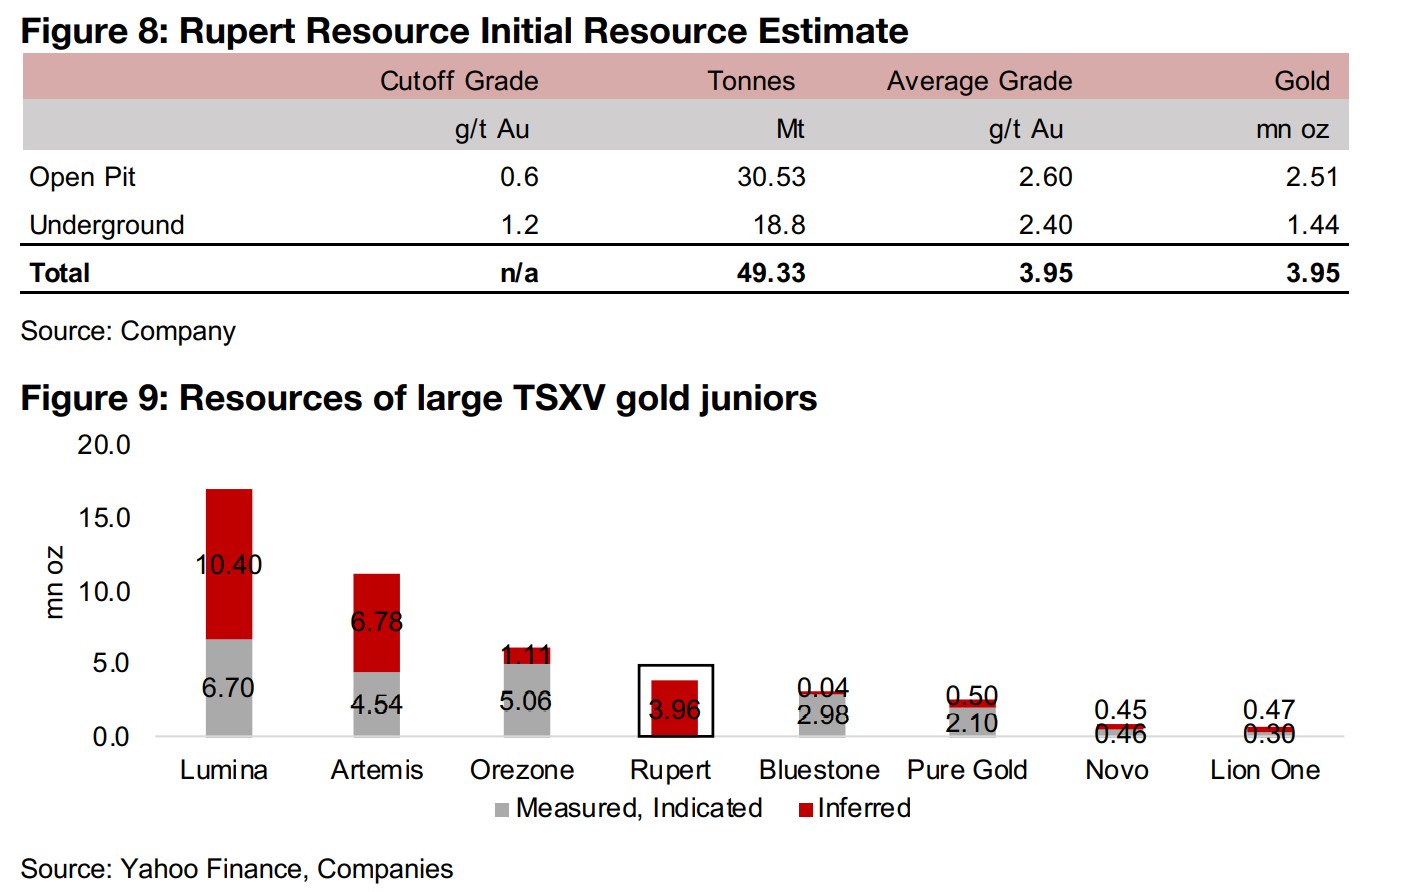 Rupert Resource declines following initial resource estimate 